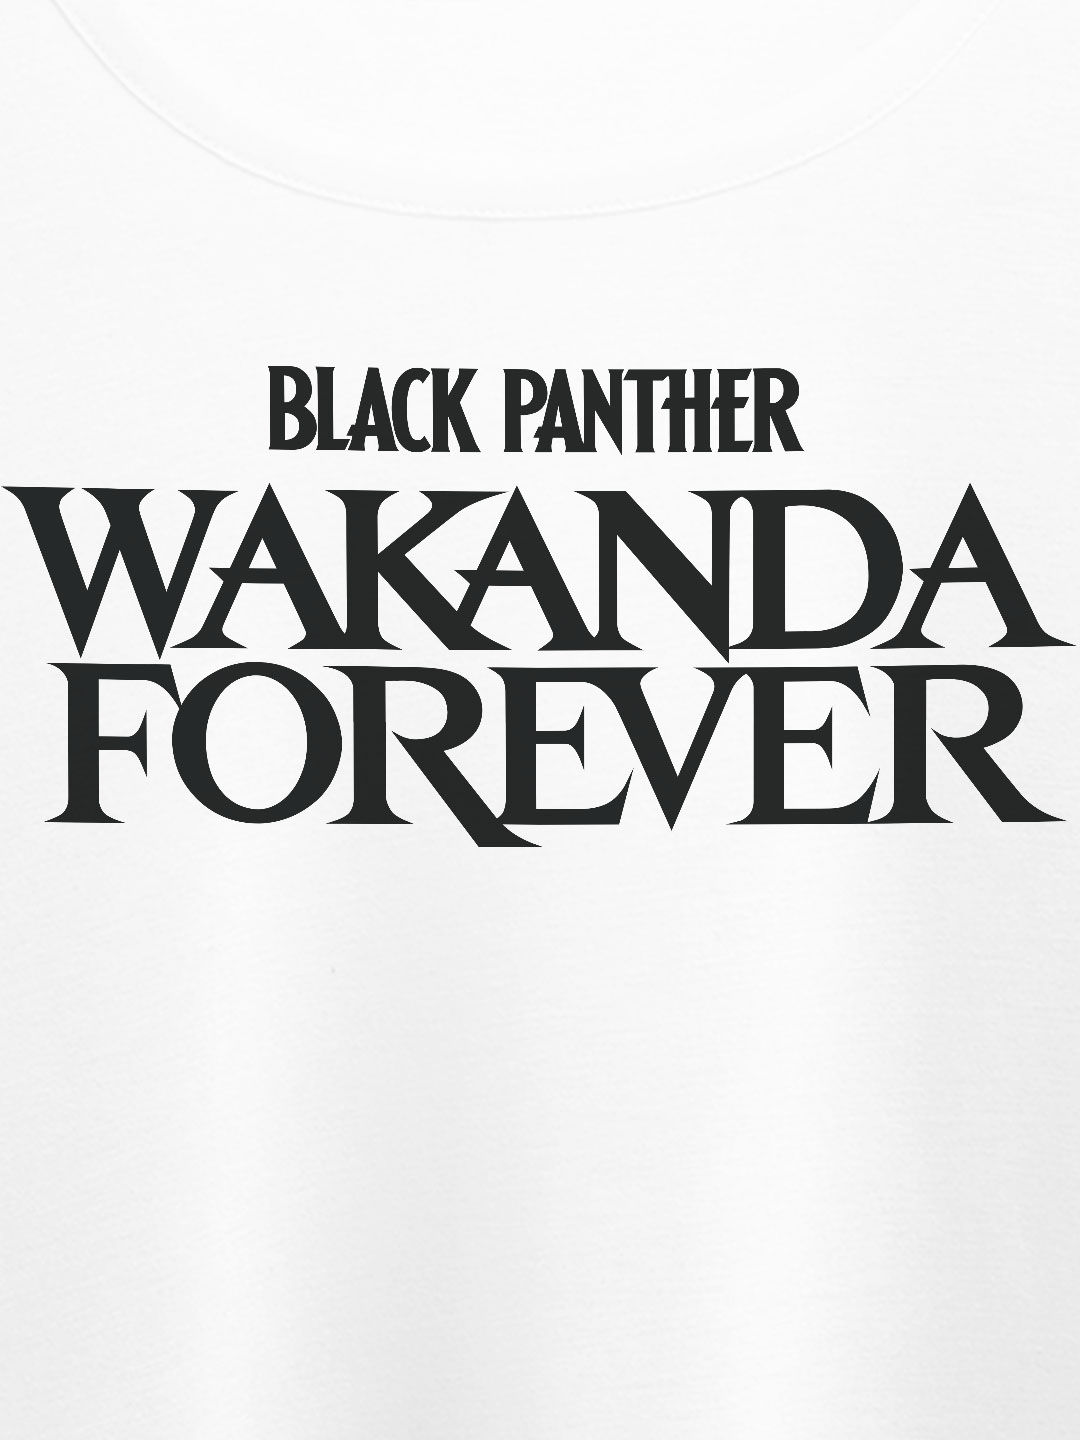 BLACK PANTER WAKANDA FOREVER FINAL LOGO PNG by Andrewvm on DeviantArt